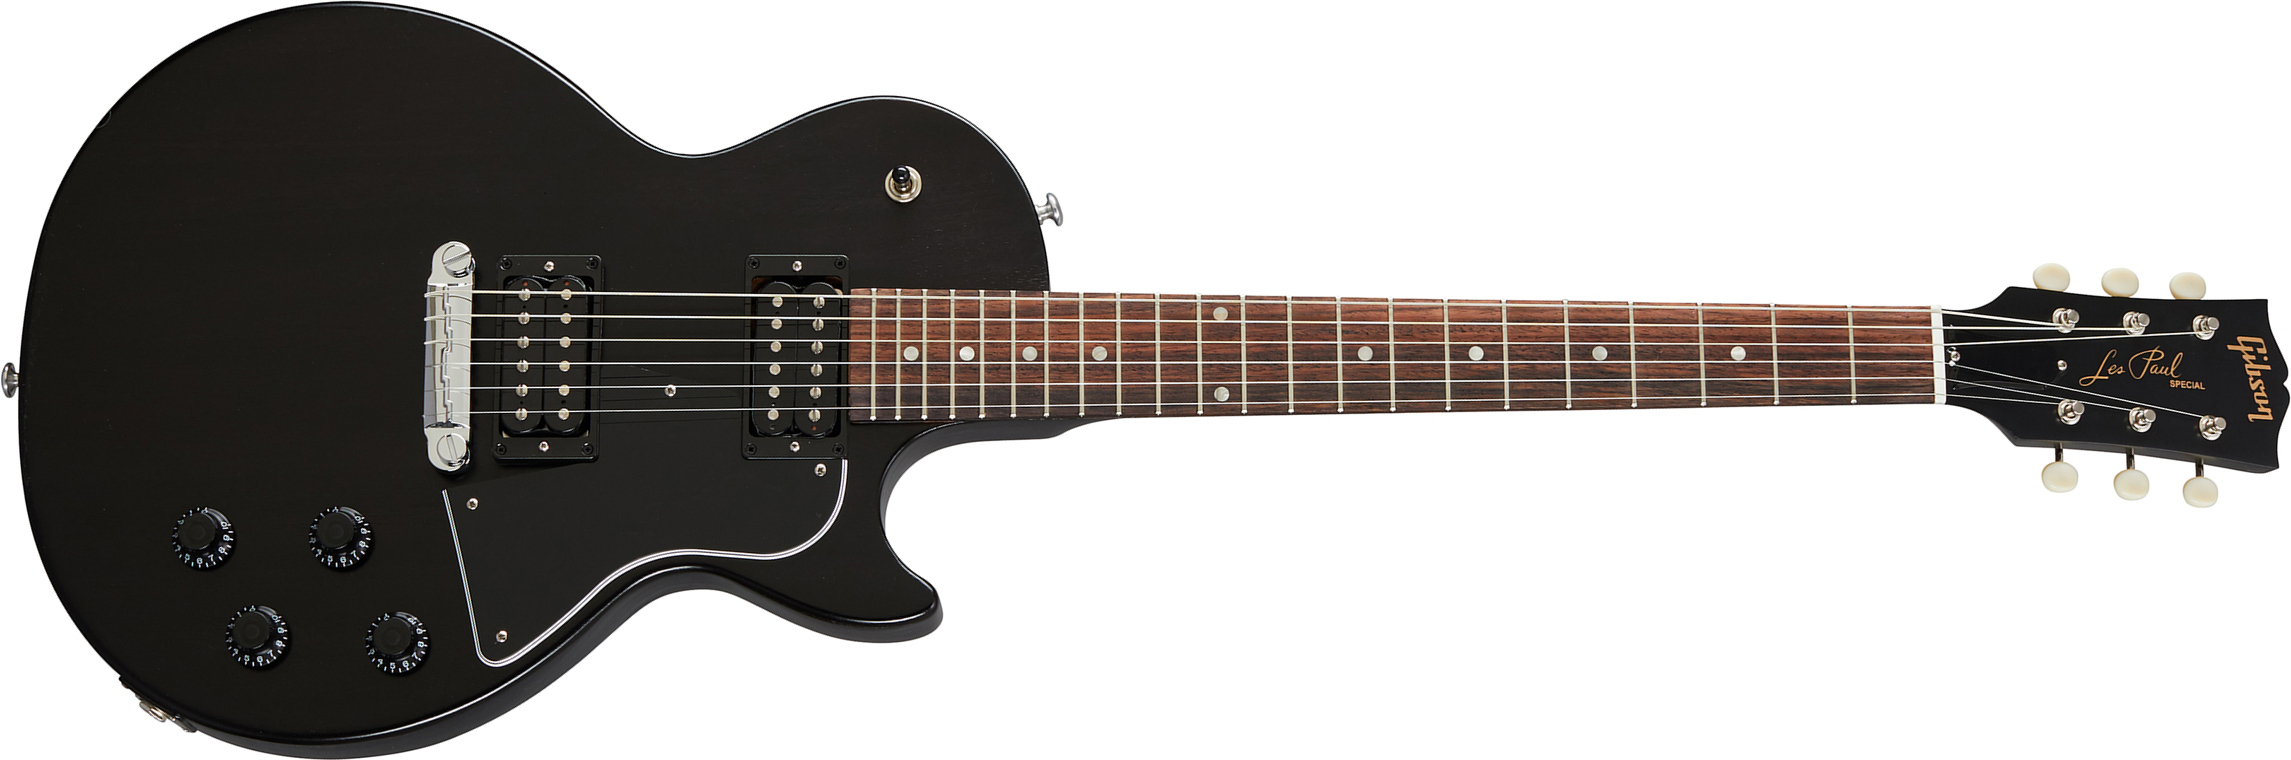 Gibson Les Paul Special Tribute Humbucker Modern 2020 2h Ht Rw - Ebony Vintage Gloss - Enkel gesneden elektrische gitaar - Main picture